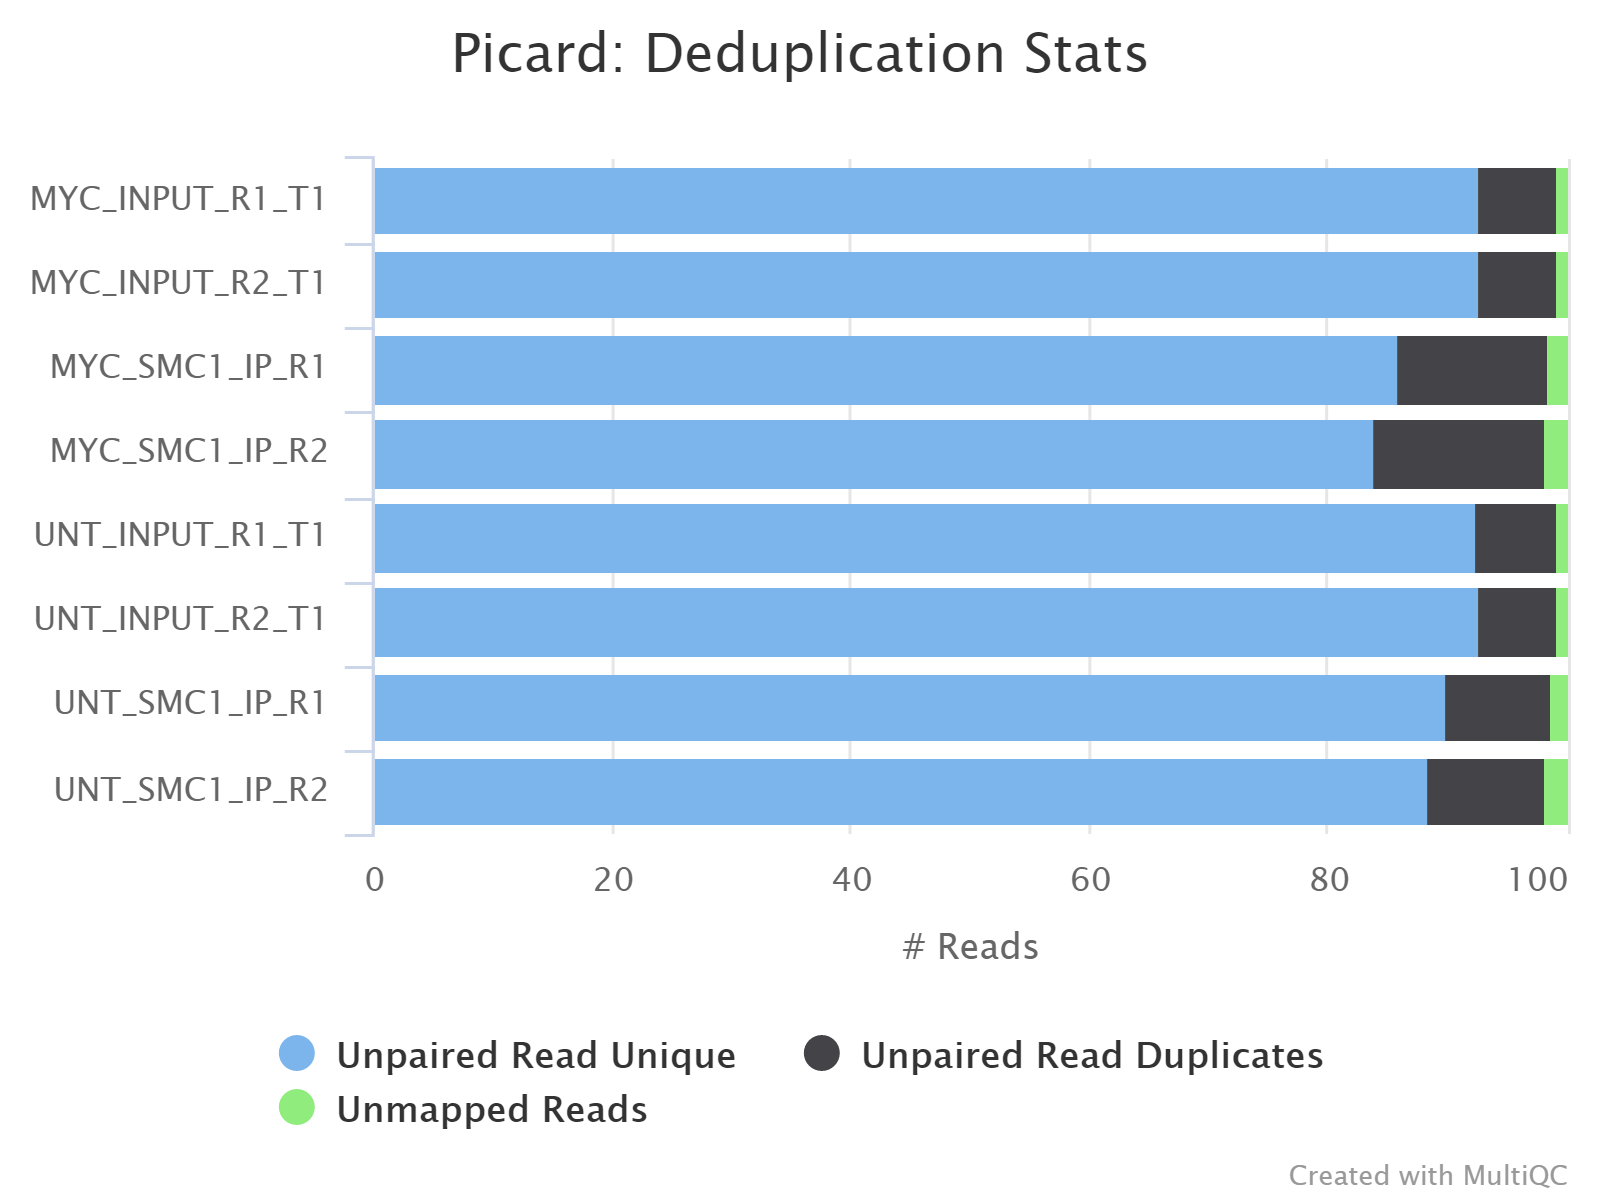 mqc_picard_deduplication_plot.png